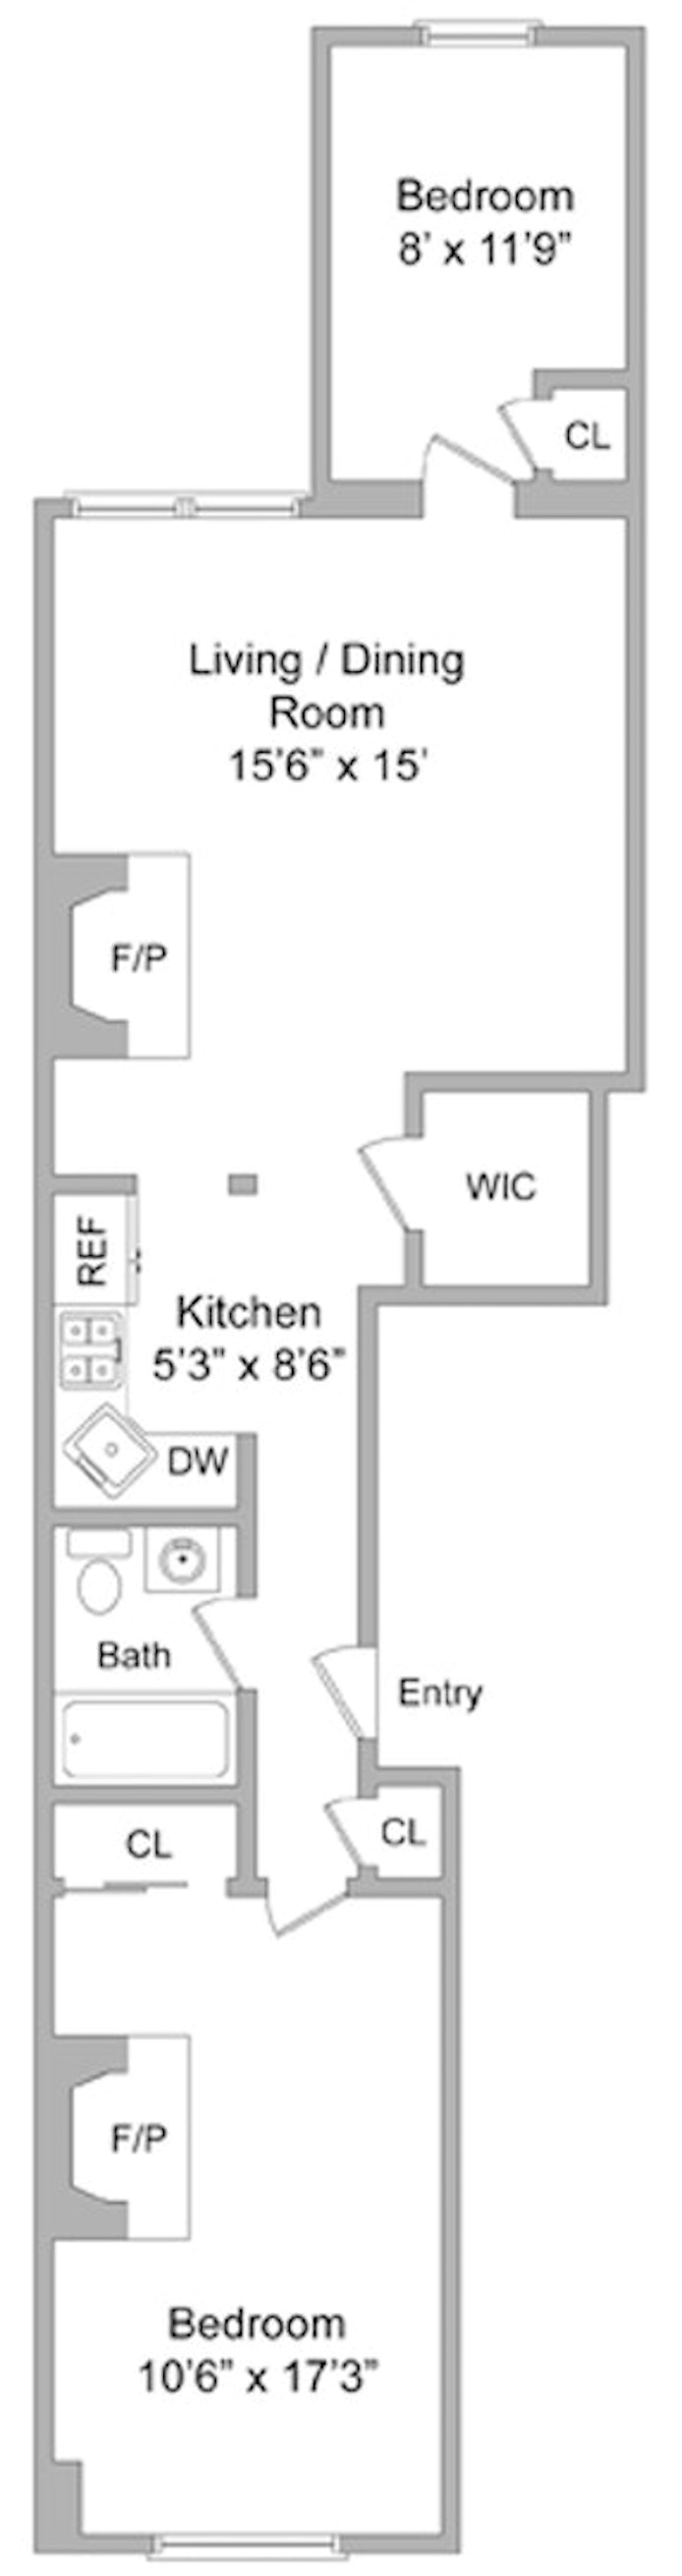 Floorplan for 316 West 90th Street, 2